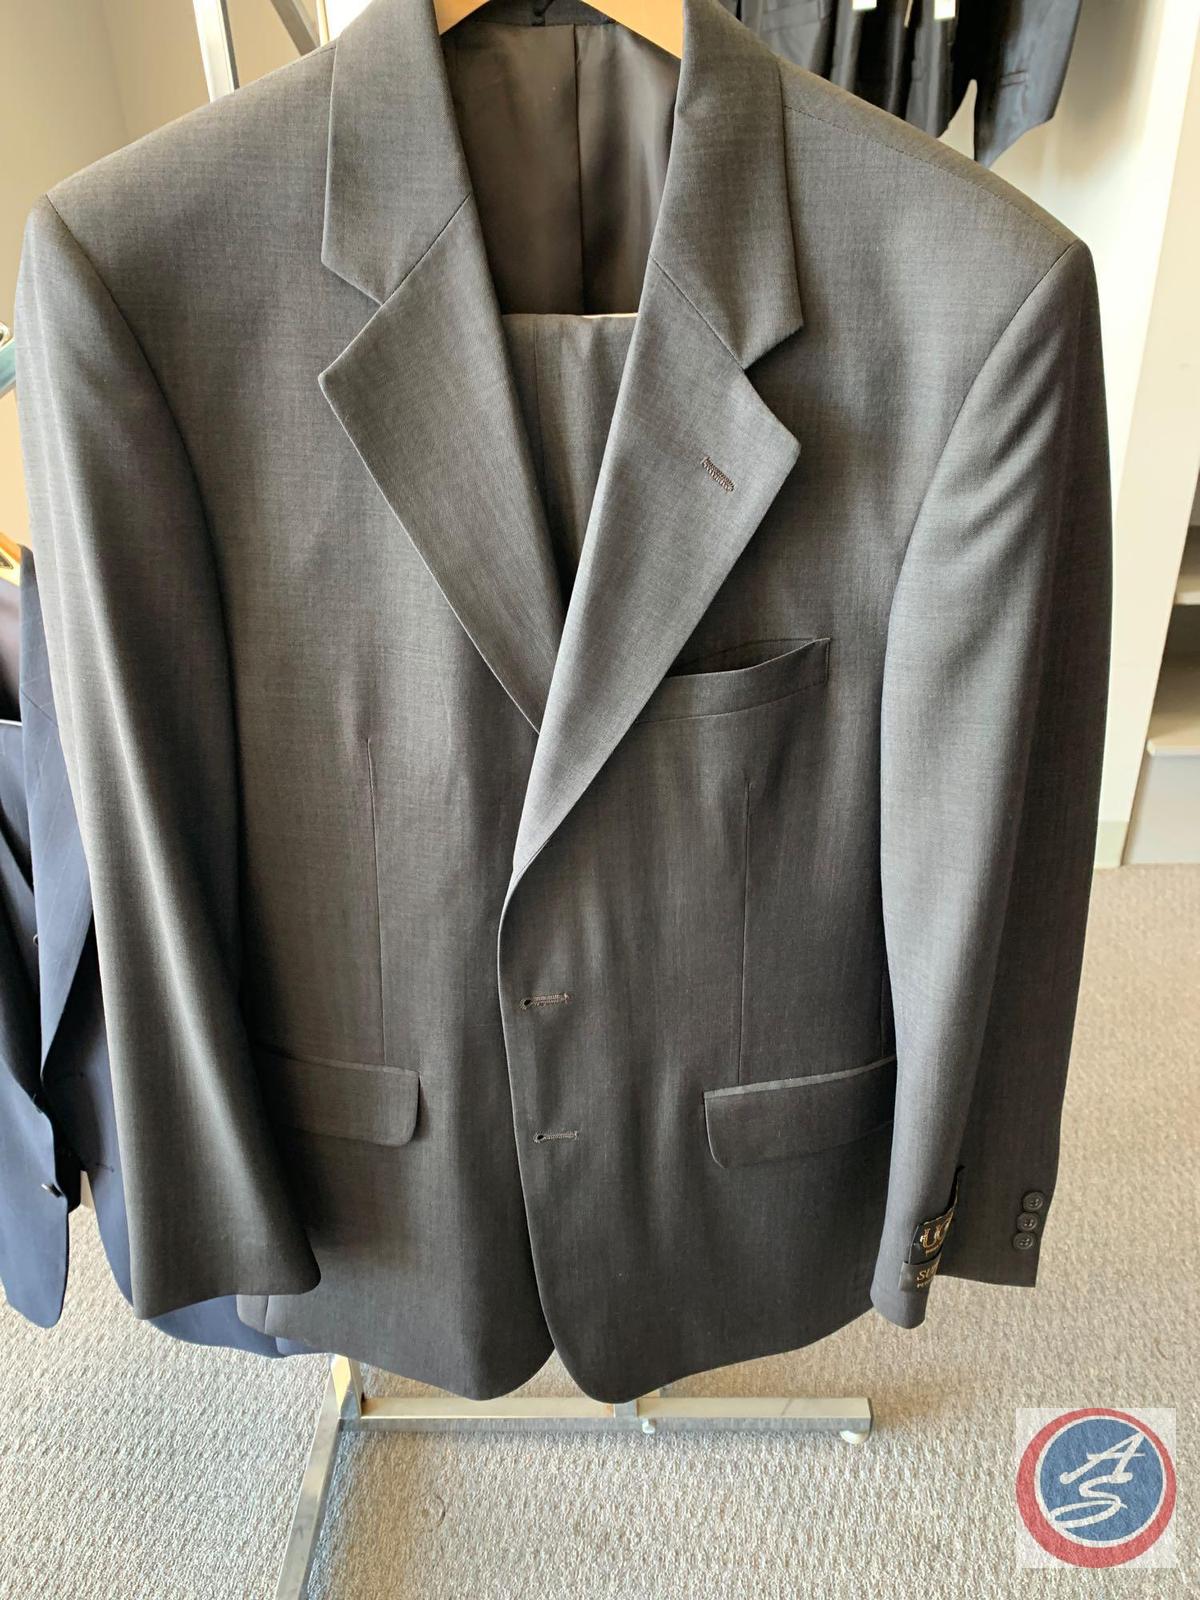 Woolmark suit size 40 tall pants 38 100% wool By Franco